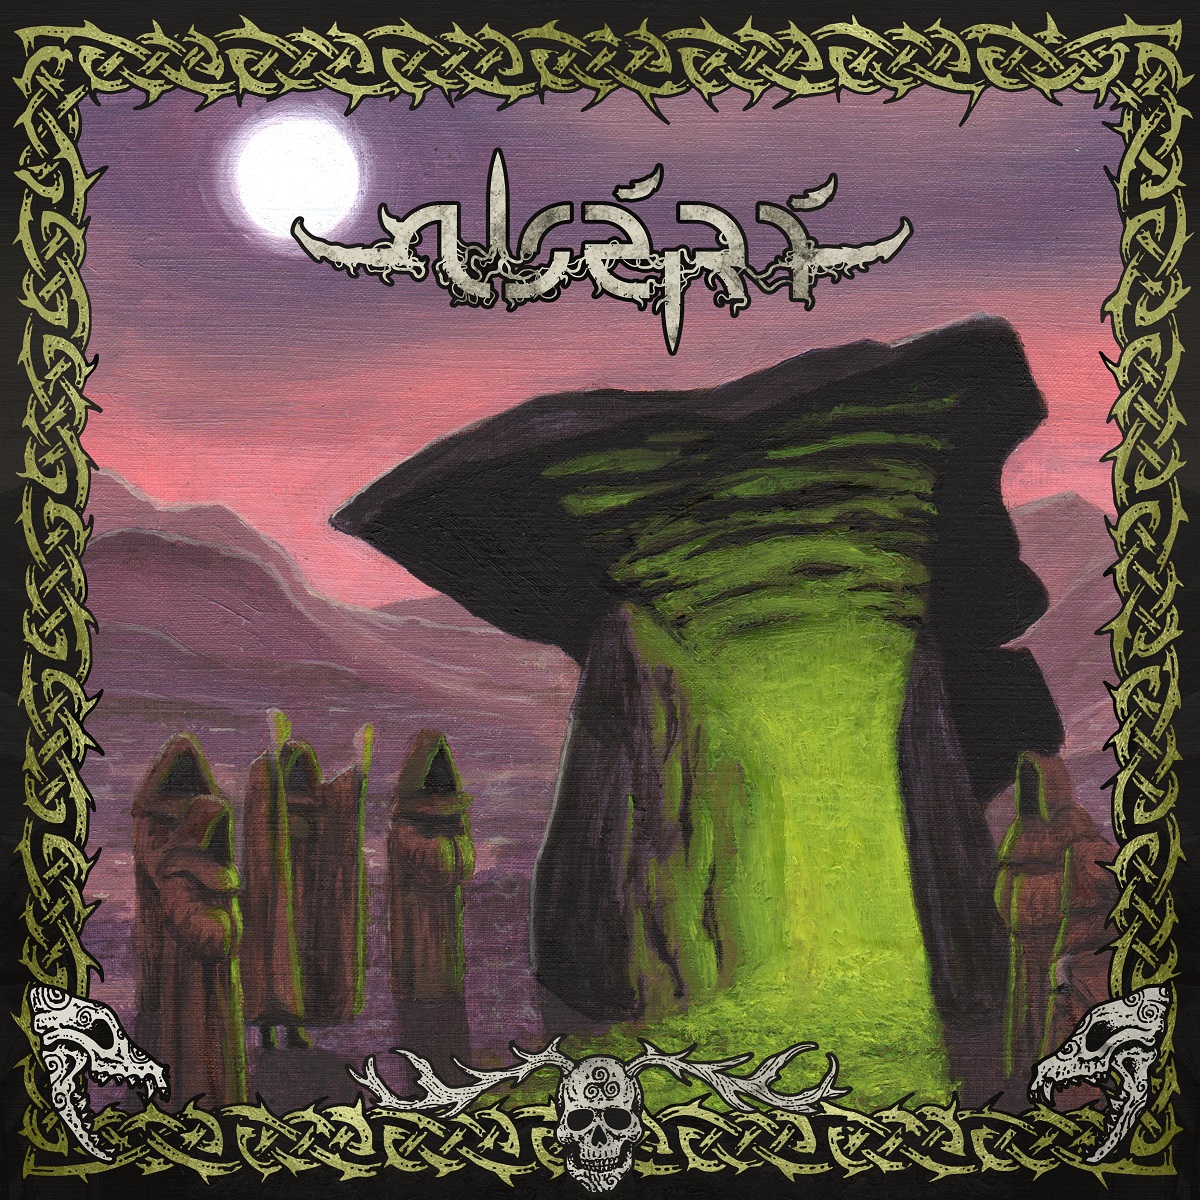 All Ireland Metal - Aiséirí - Album Artwork